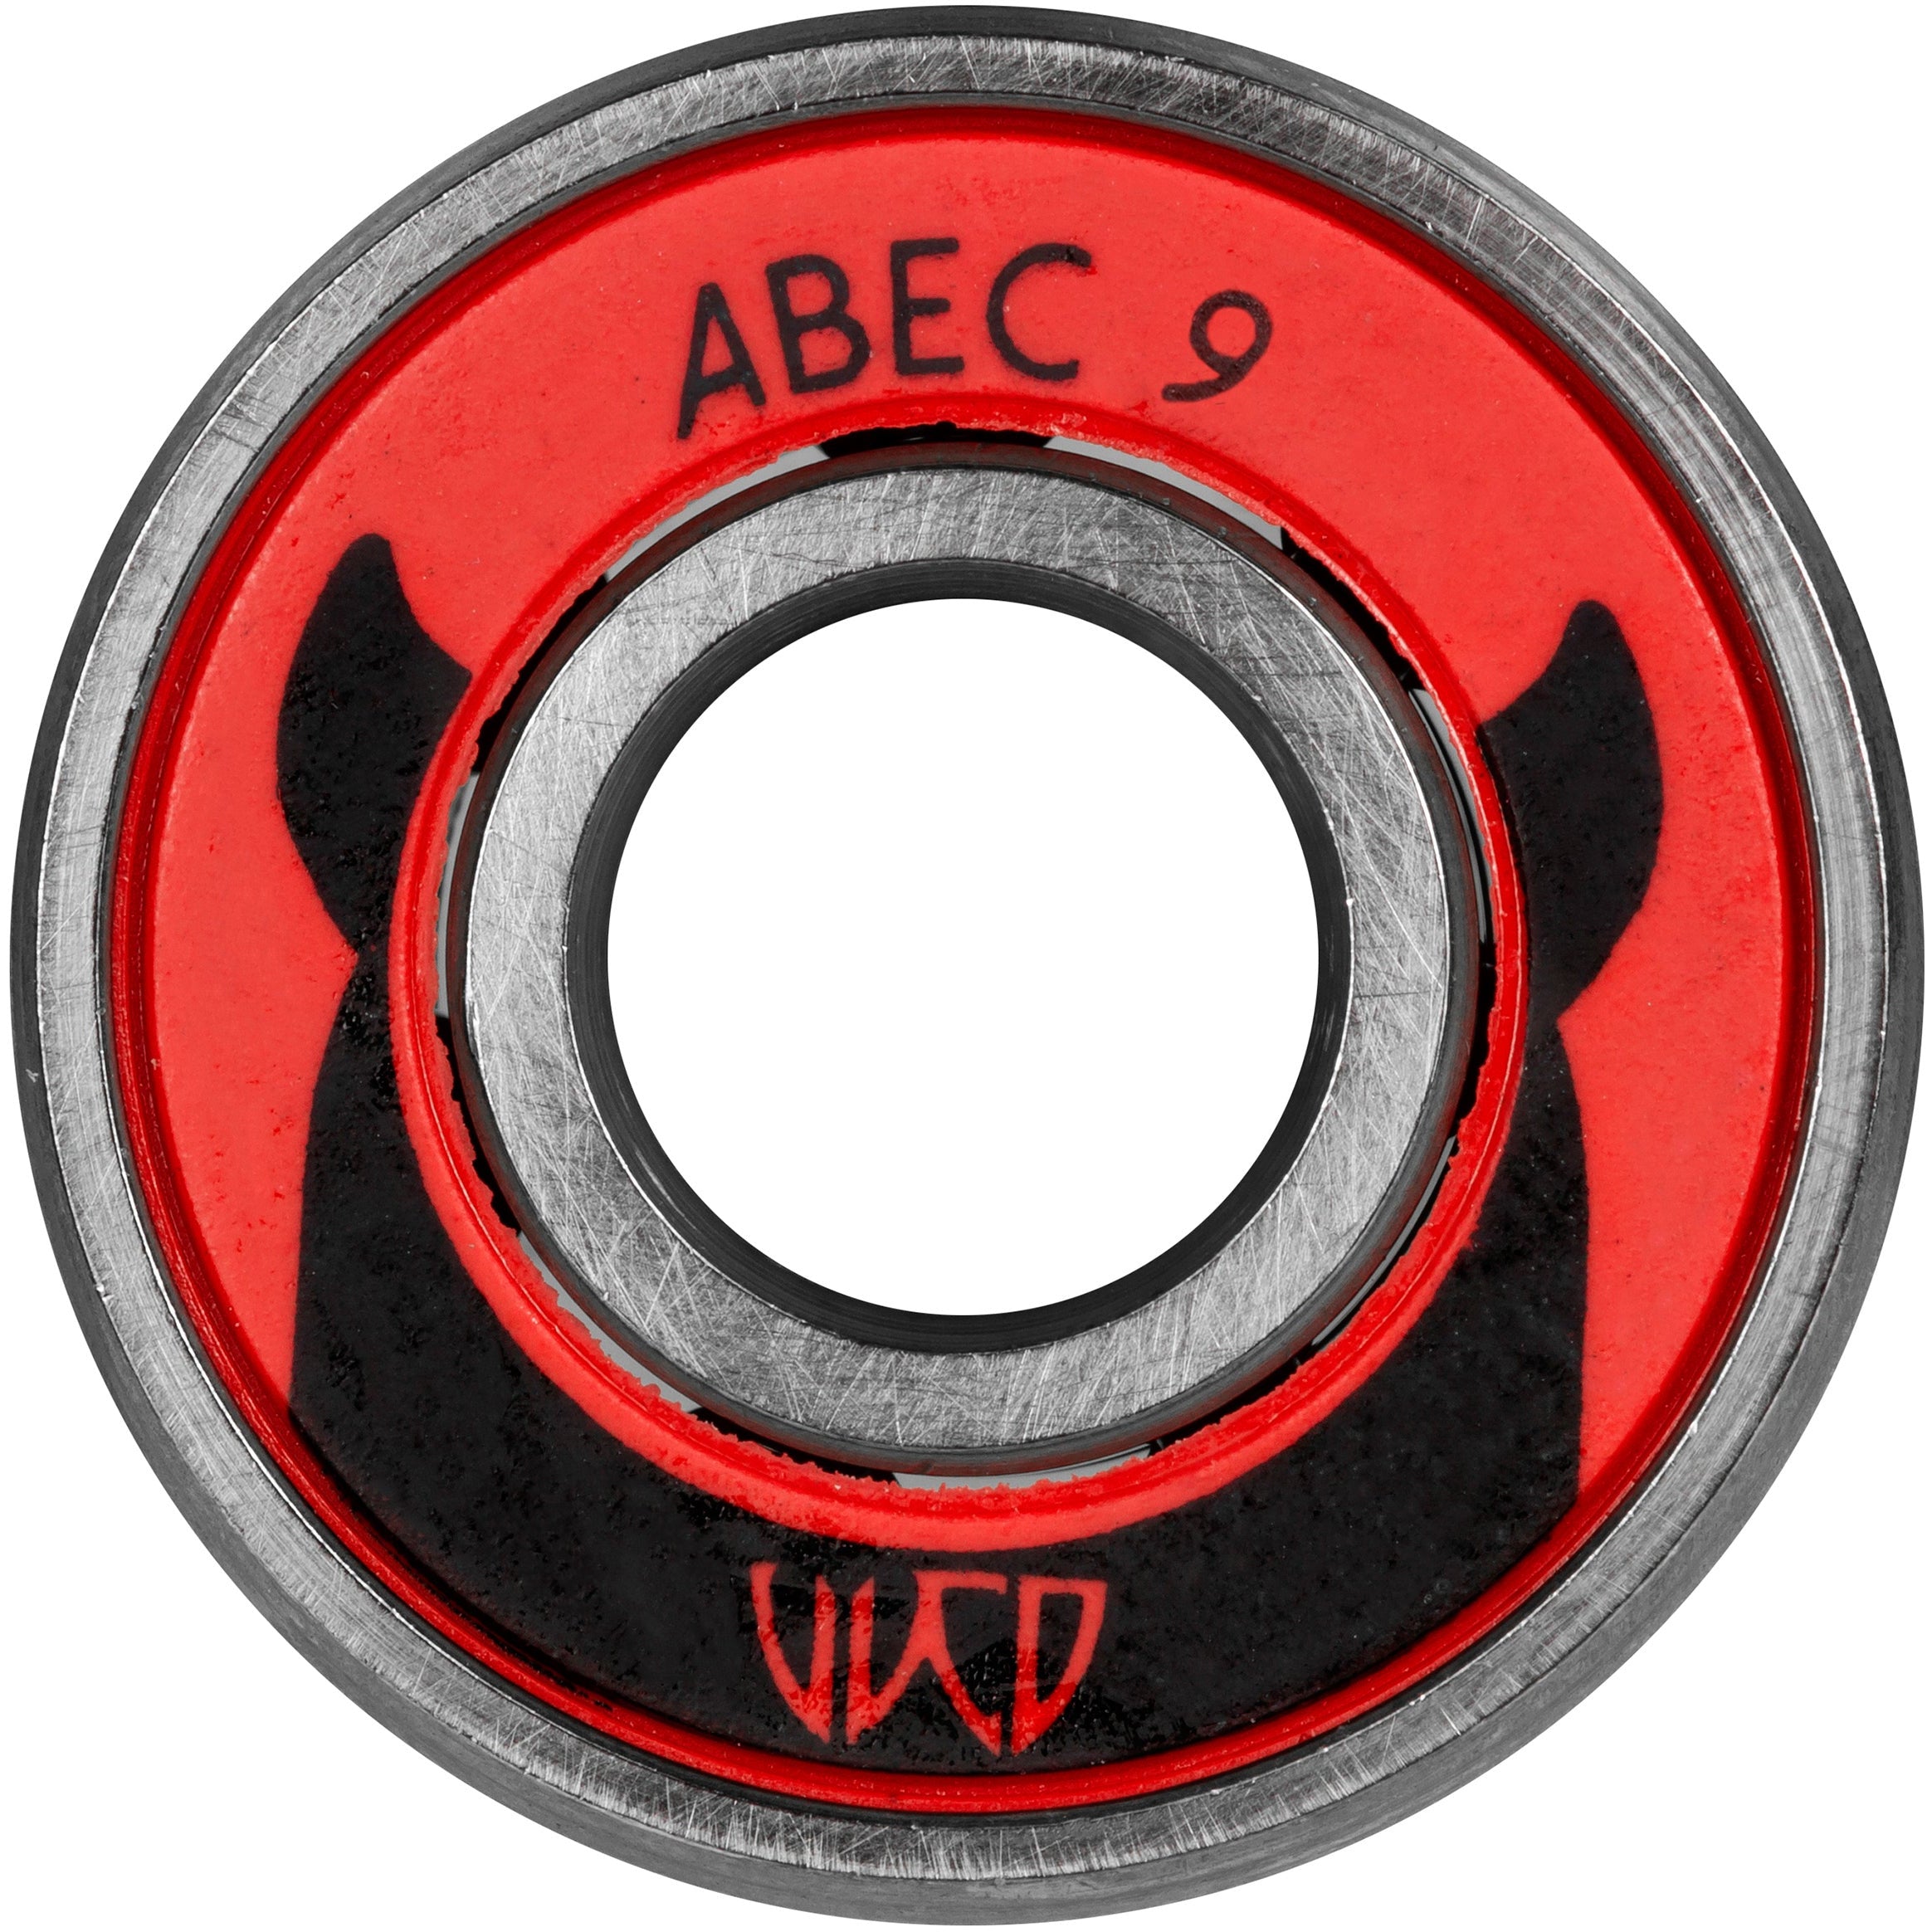 Wicked ABEC 9 Bearings (16-Pack)